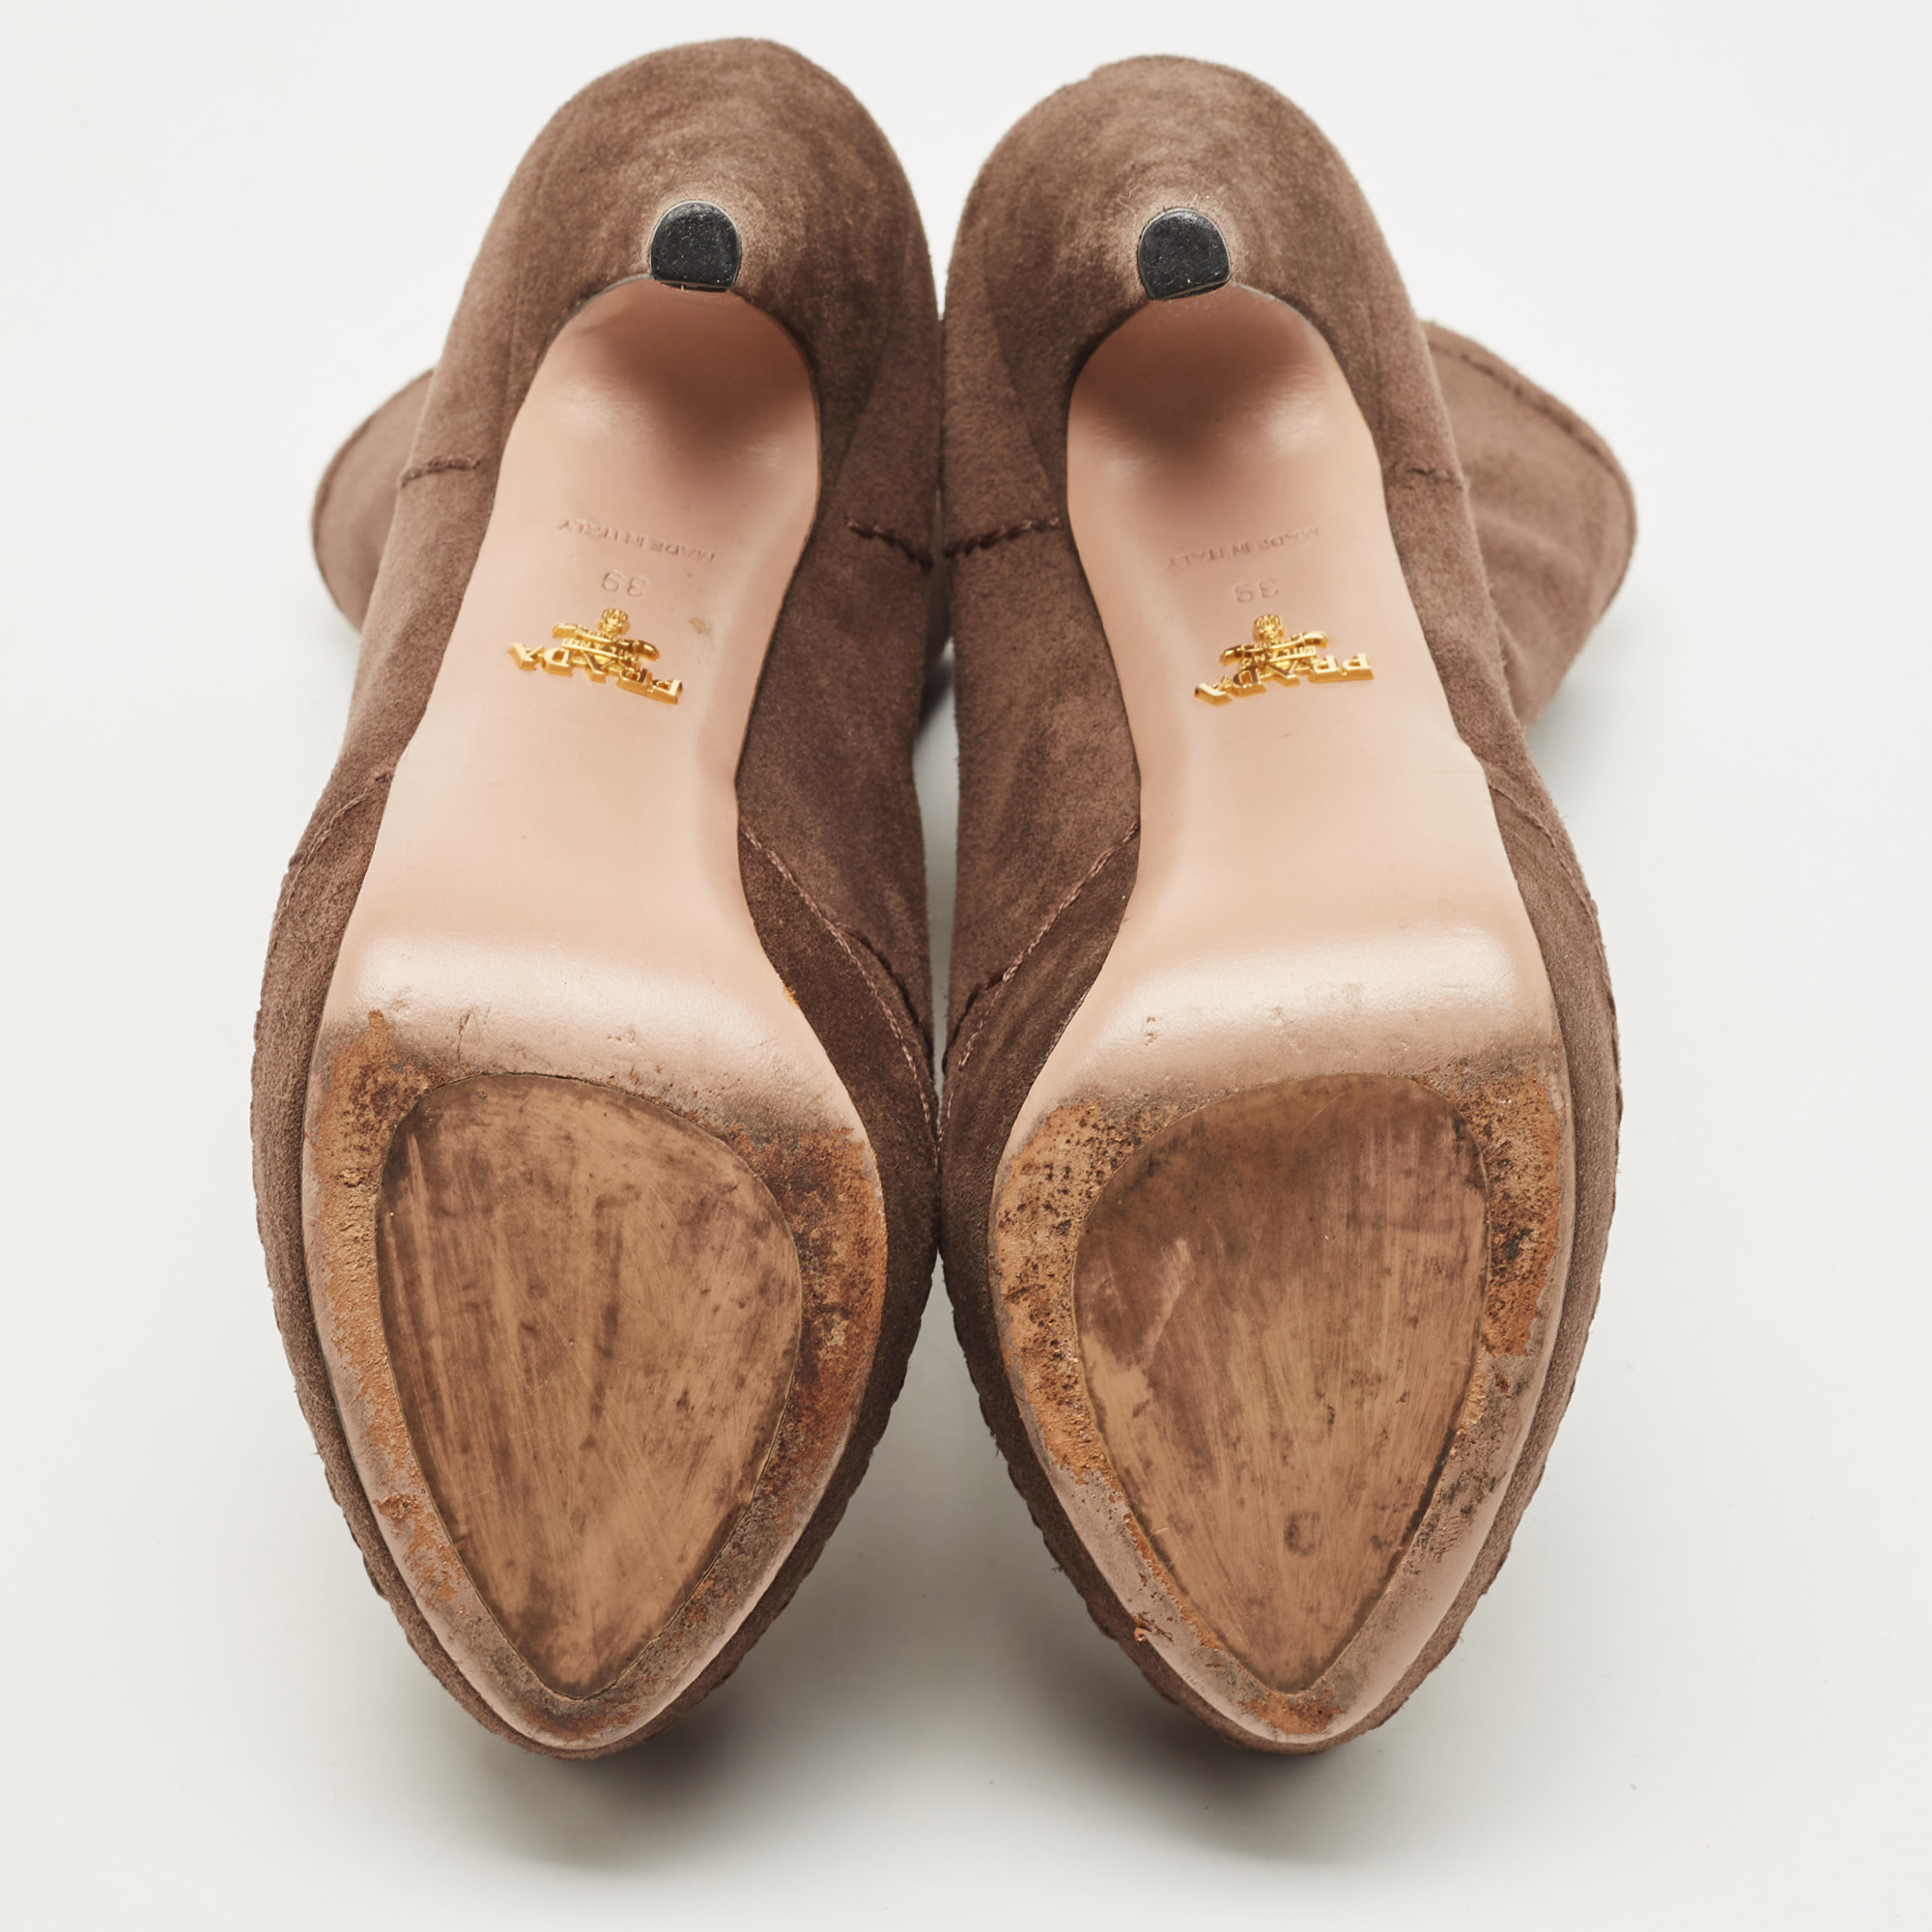 Prada Brown Suede Platform Ankle Boots Size 39